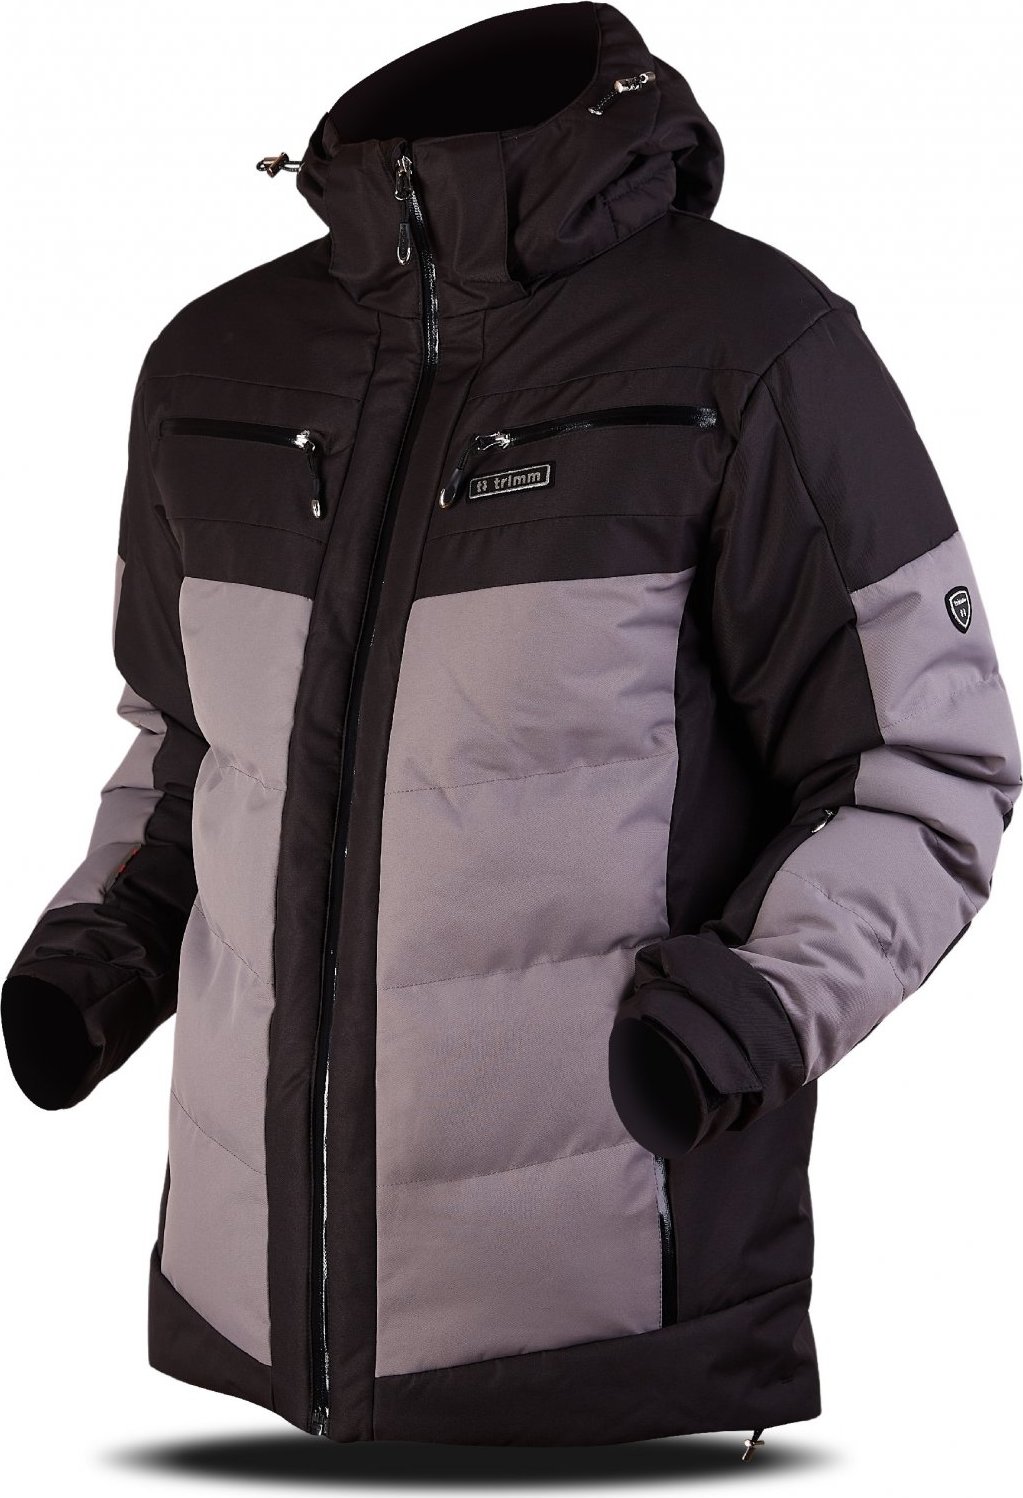 Pánská lyžařská bunda TRIMM Vario šedá/černá Velikost: 3XL, Barva: grey/ black